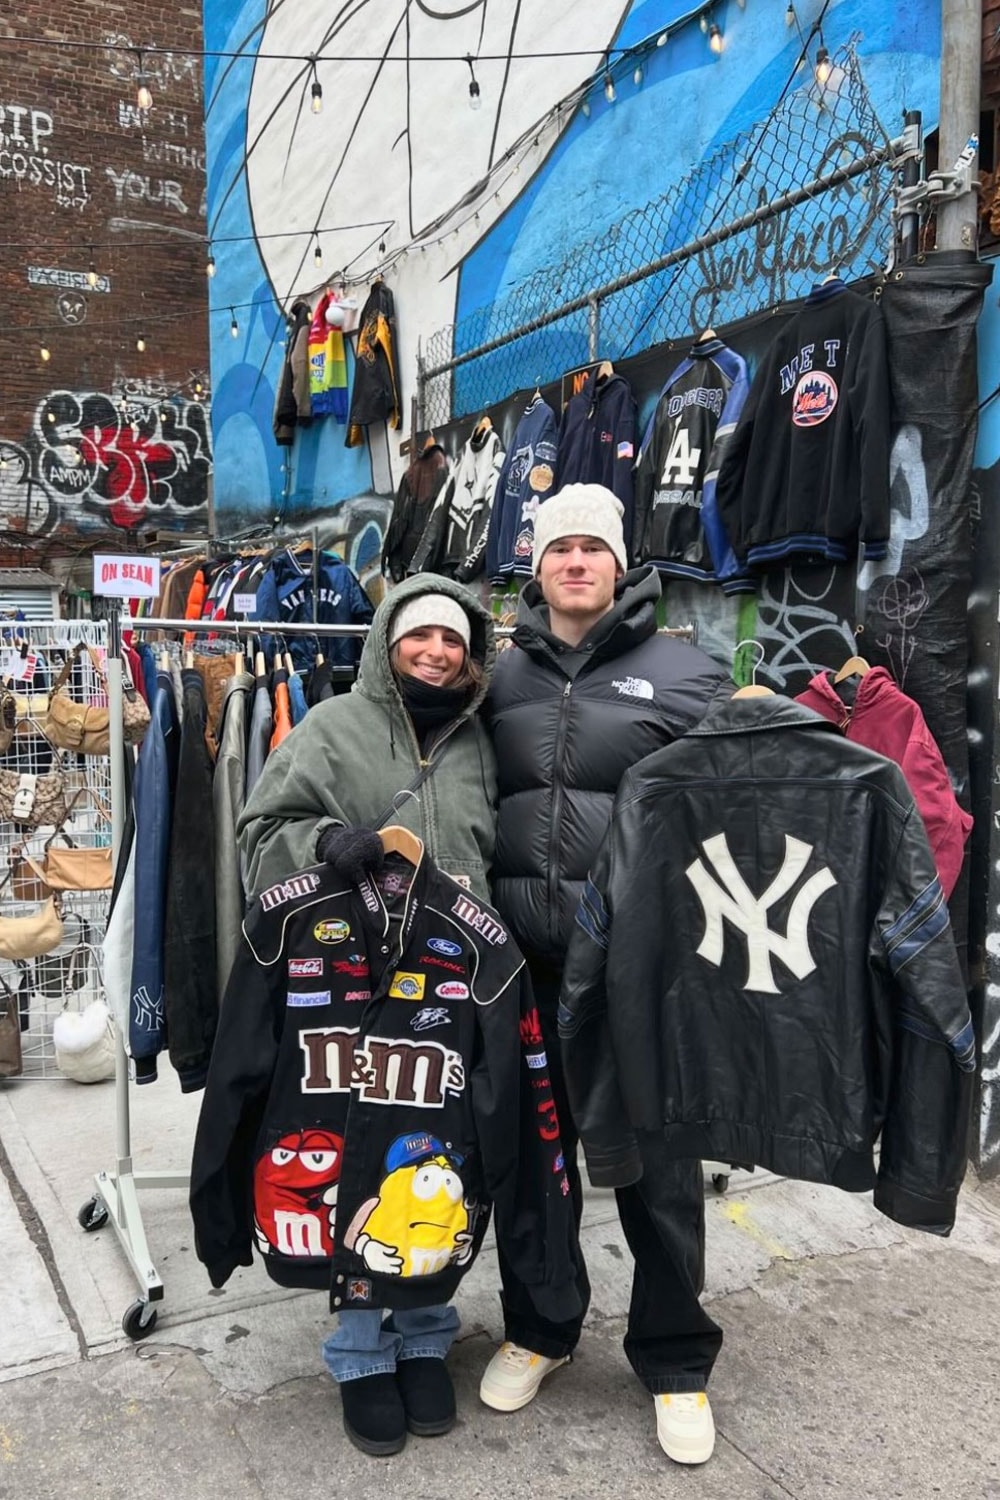 depop hypebeast flea hypebae local creatives artists vendors vintage secondhand clothing new york city may brooklyn